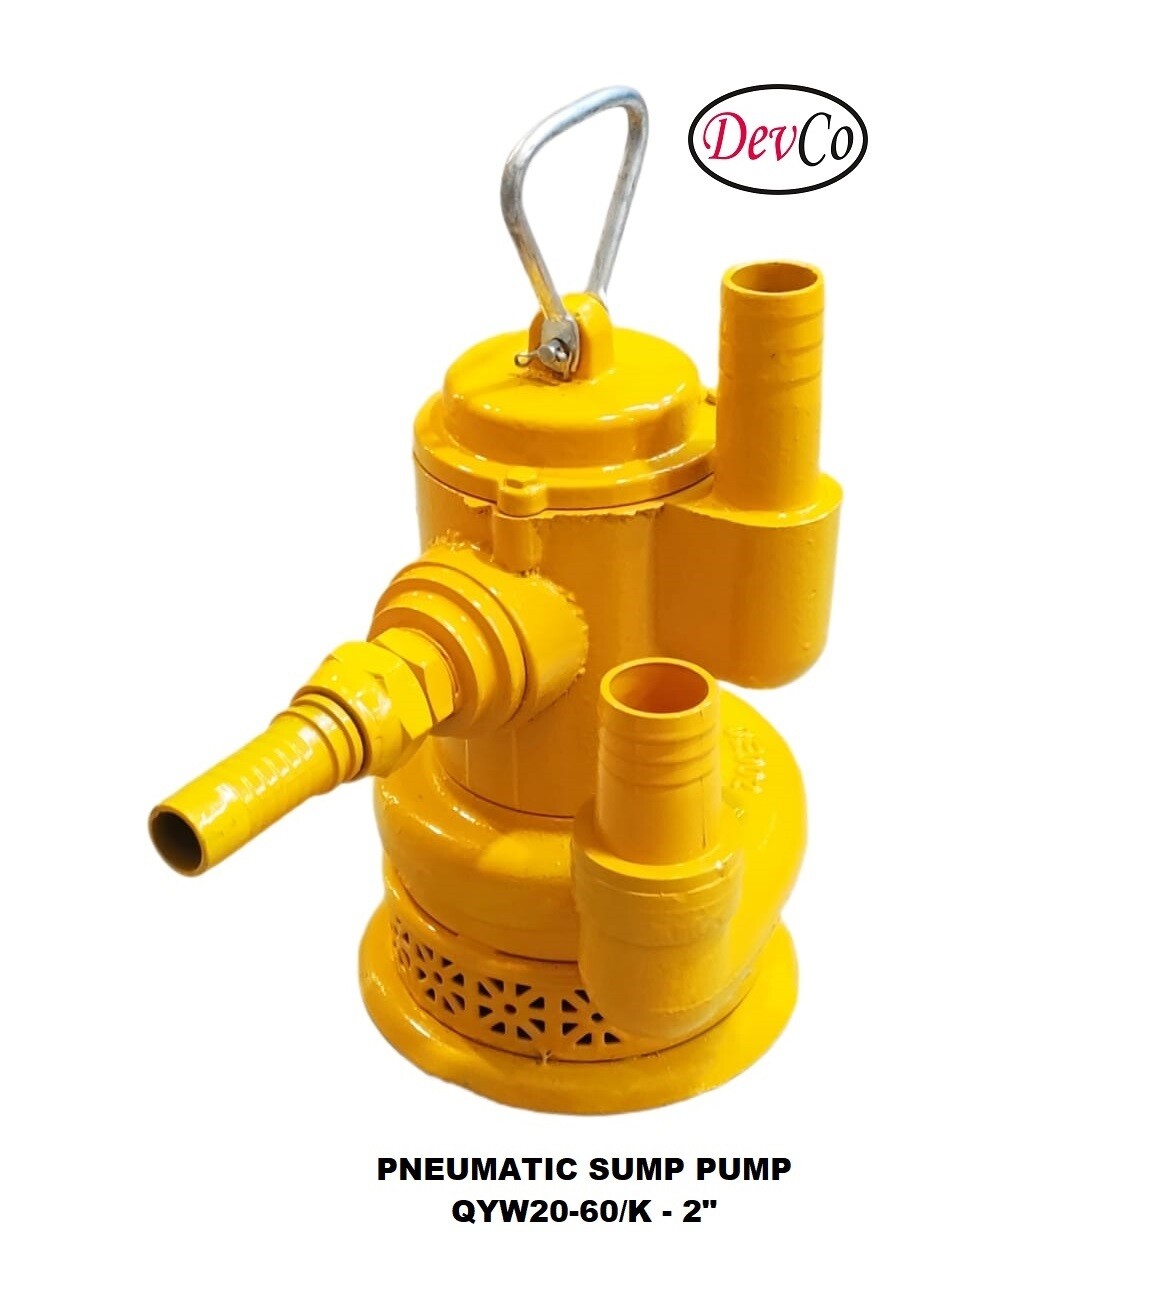 Pneumatic Sump Pump QYW20-60/K Pompa Celup Pneumatik 2"